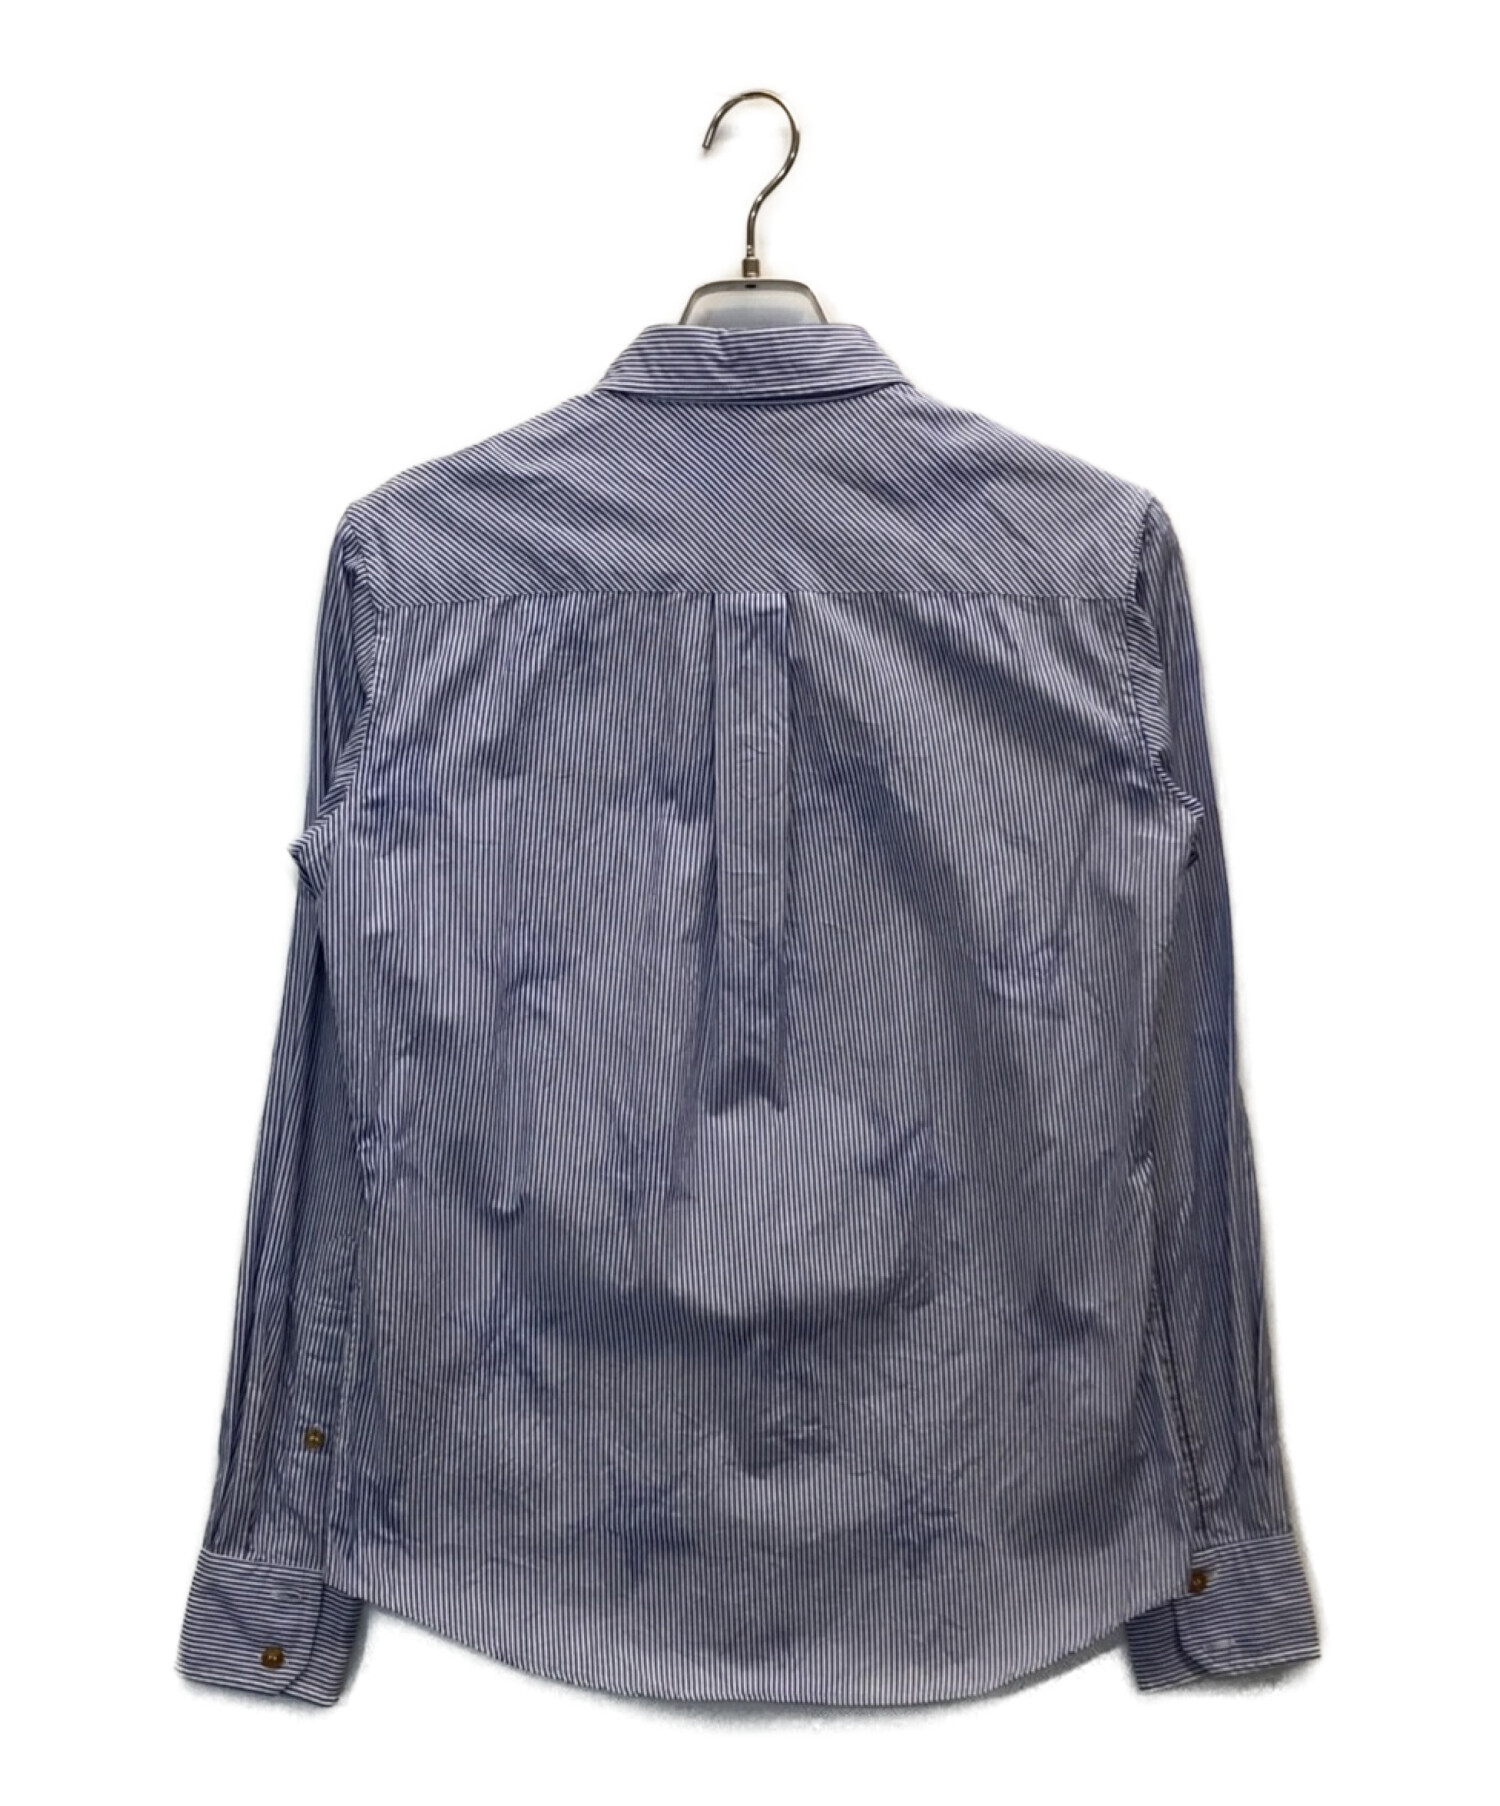 Vivienne Westwood man (ヴィヴィアン ウェストウッド マン) オーブ刺繍ピンストライプシャツ　スター柄シャツ ブルー サイズ:44